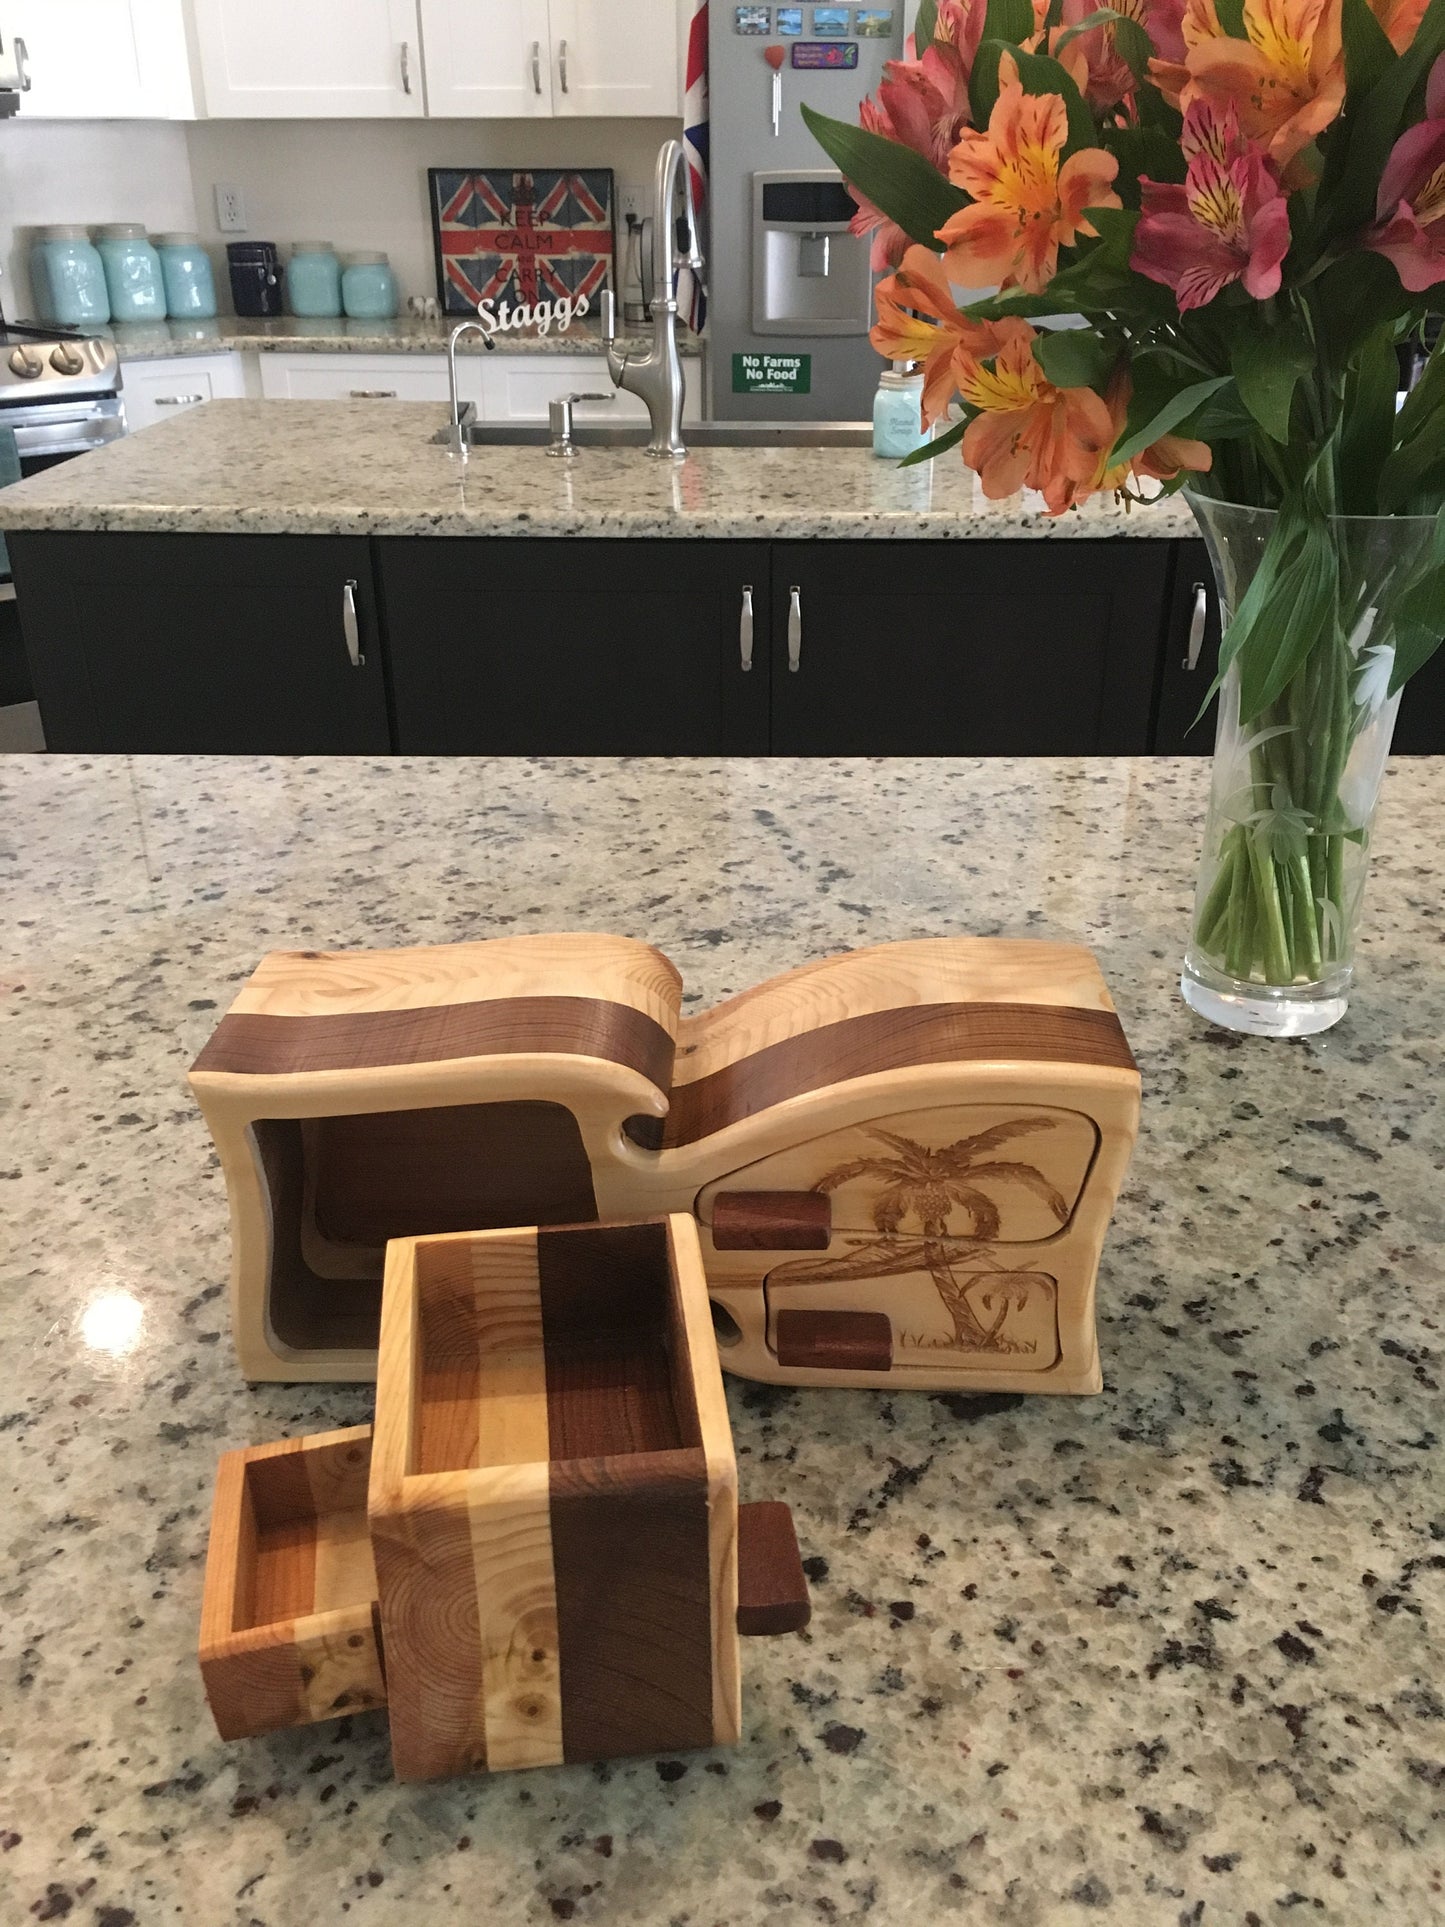 Solid Wood Box W/Drawers - Palm Tree Hammock, Jewelry Box, Handcrafted, Custom Box, Personalized Box, Handmade, Engraved, Stash Box